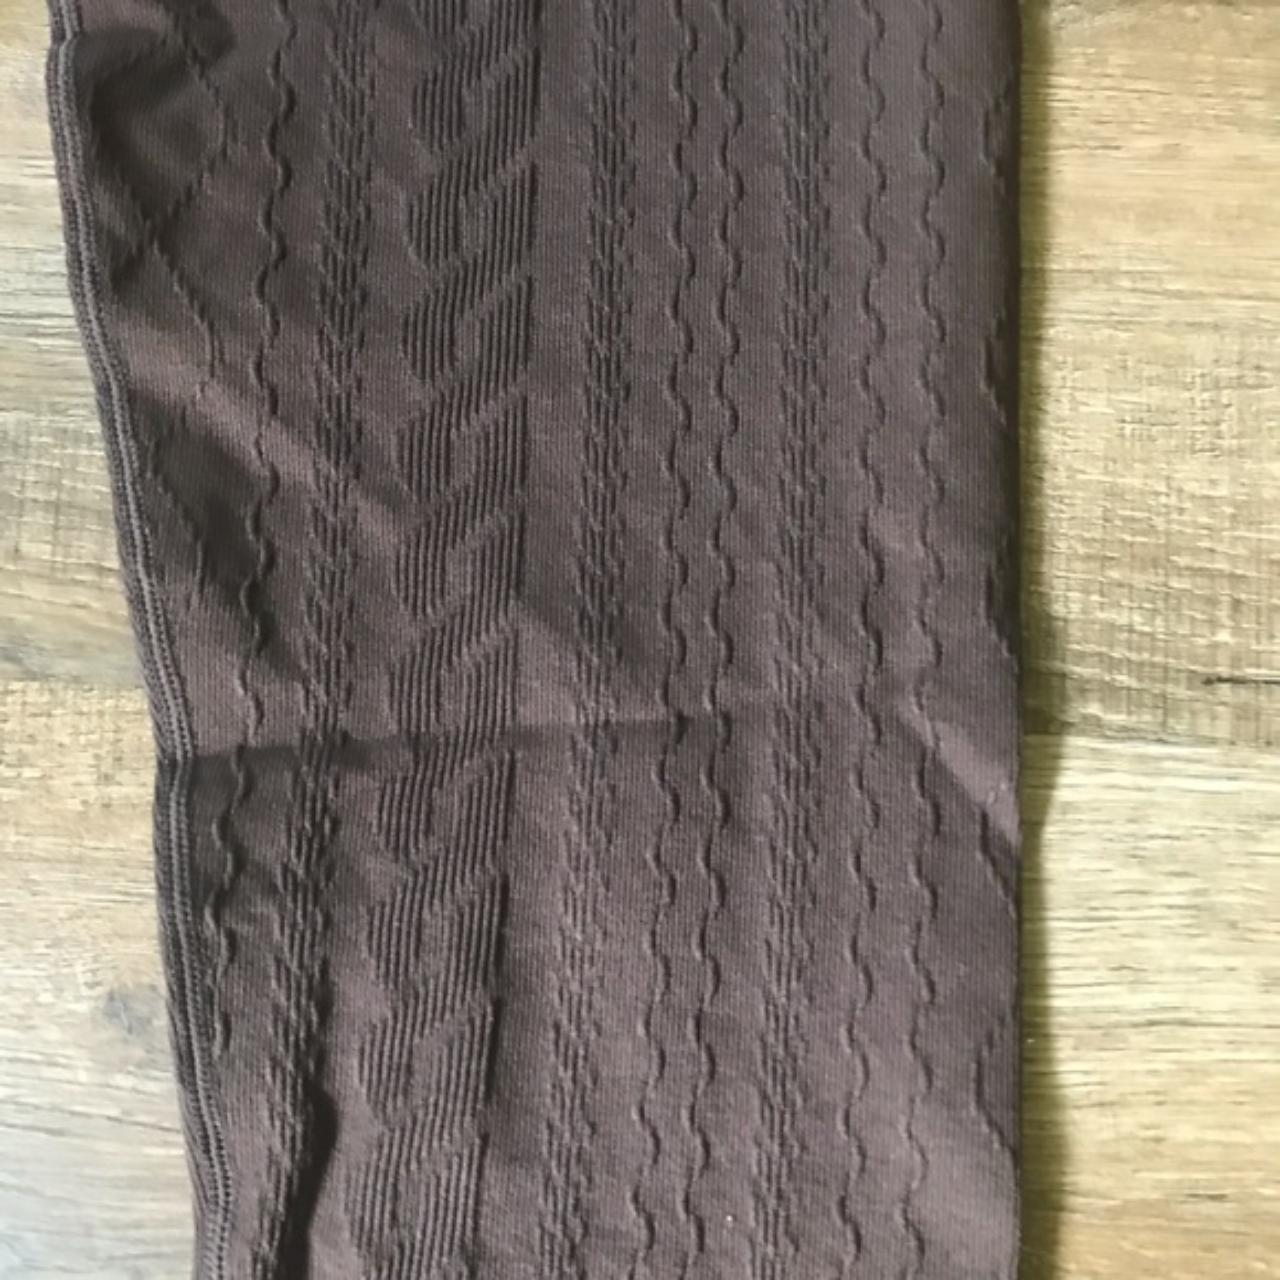 Joy Lab brown high rise knit leggings in perfect - Depop